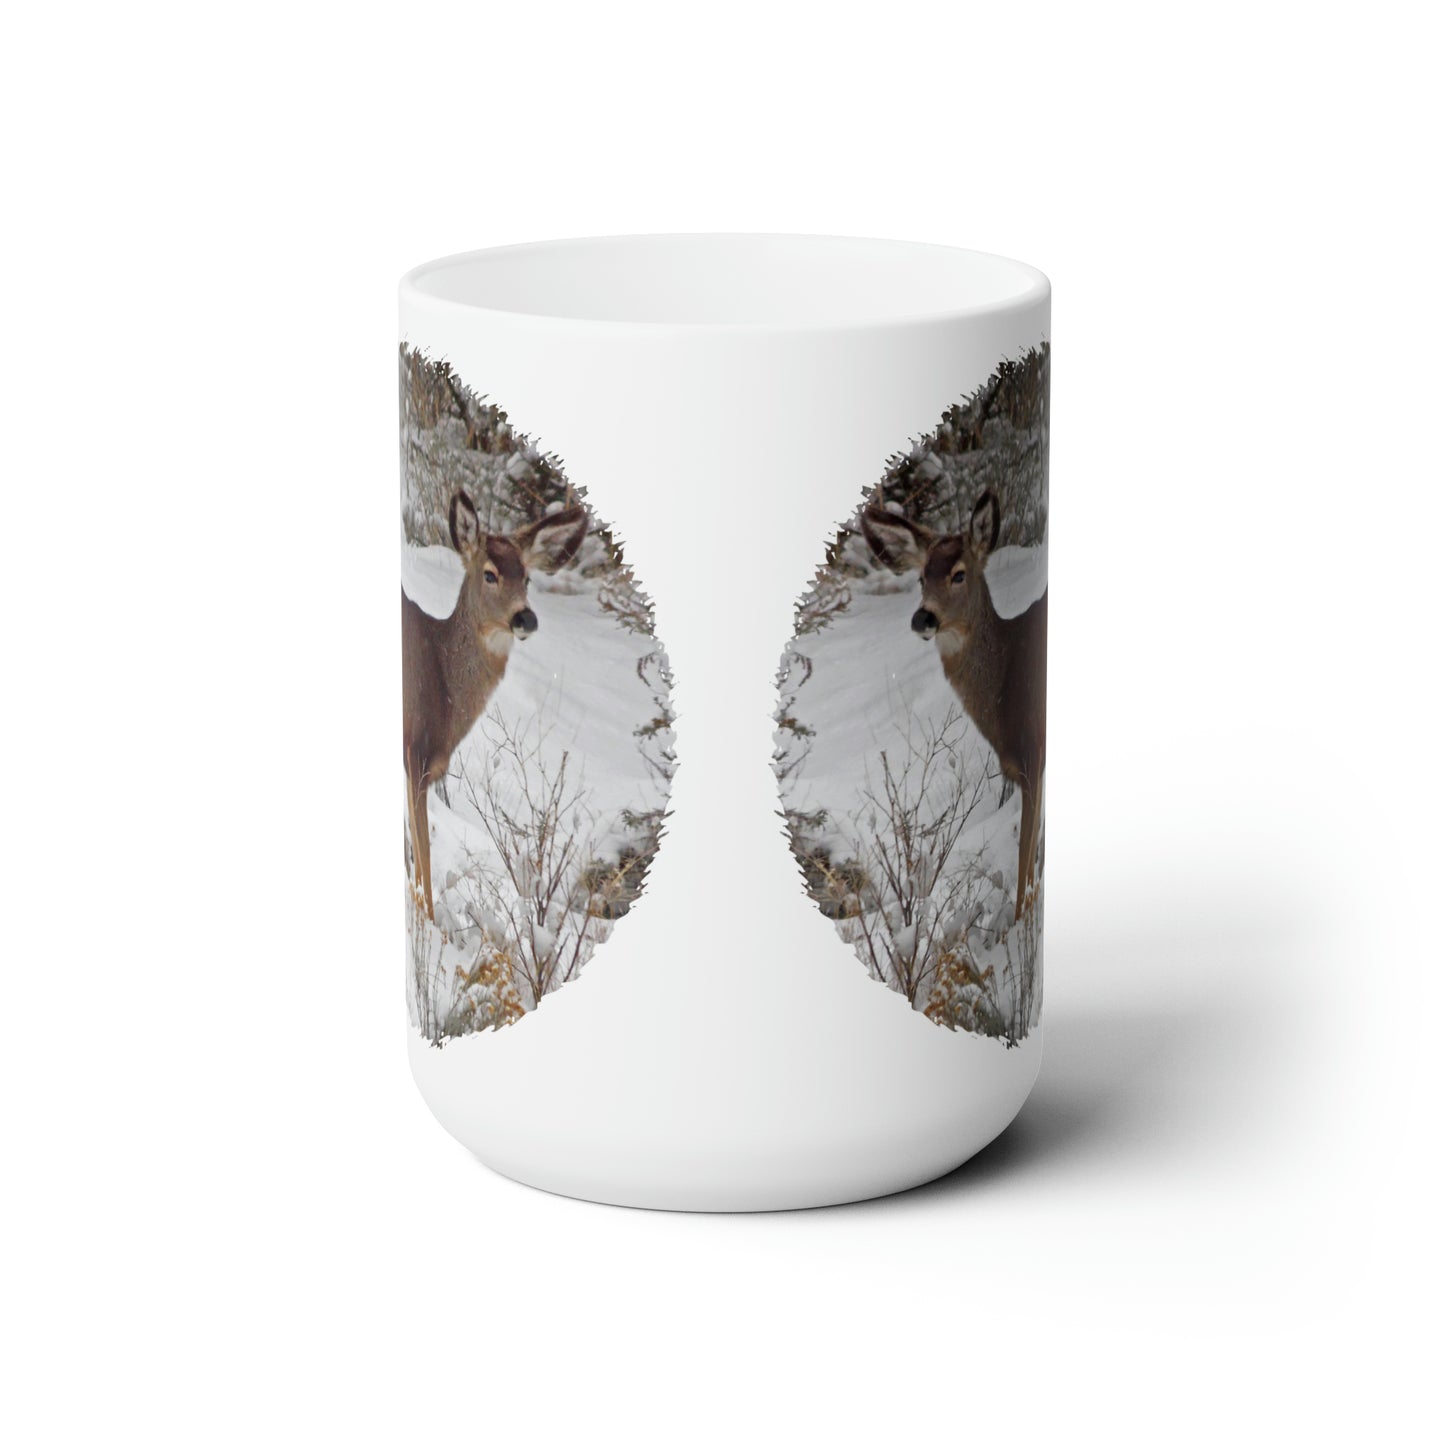 Snowy Deer Ceramic Mug 15oz